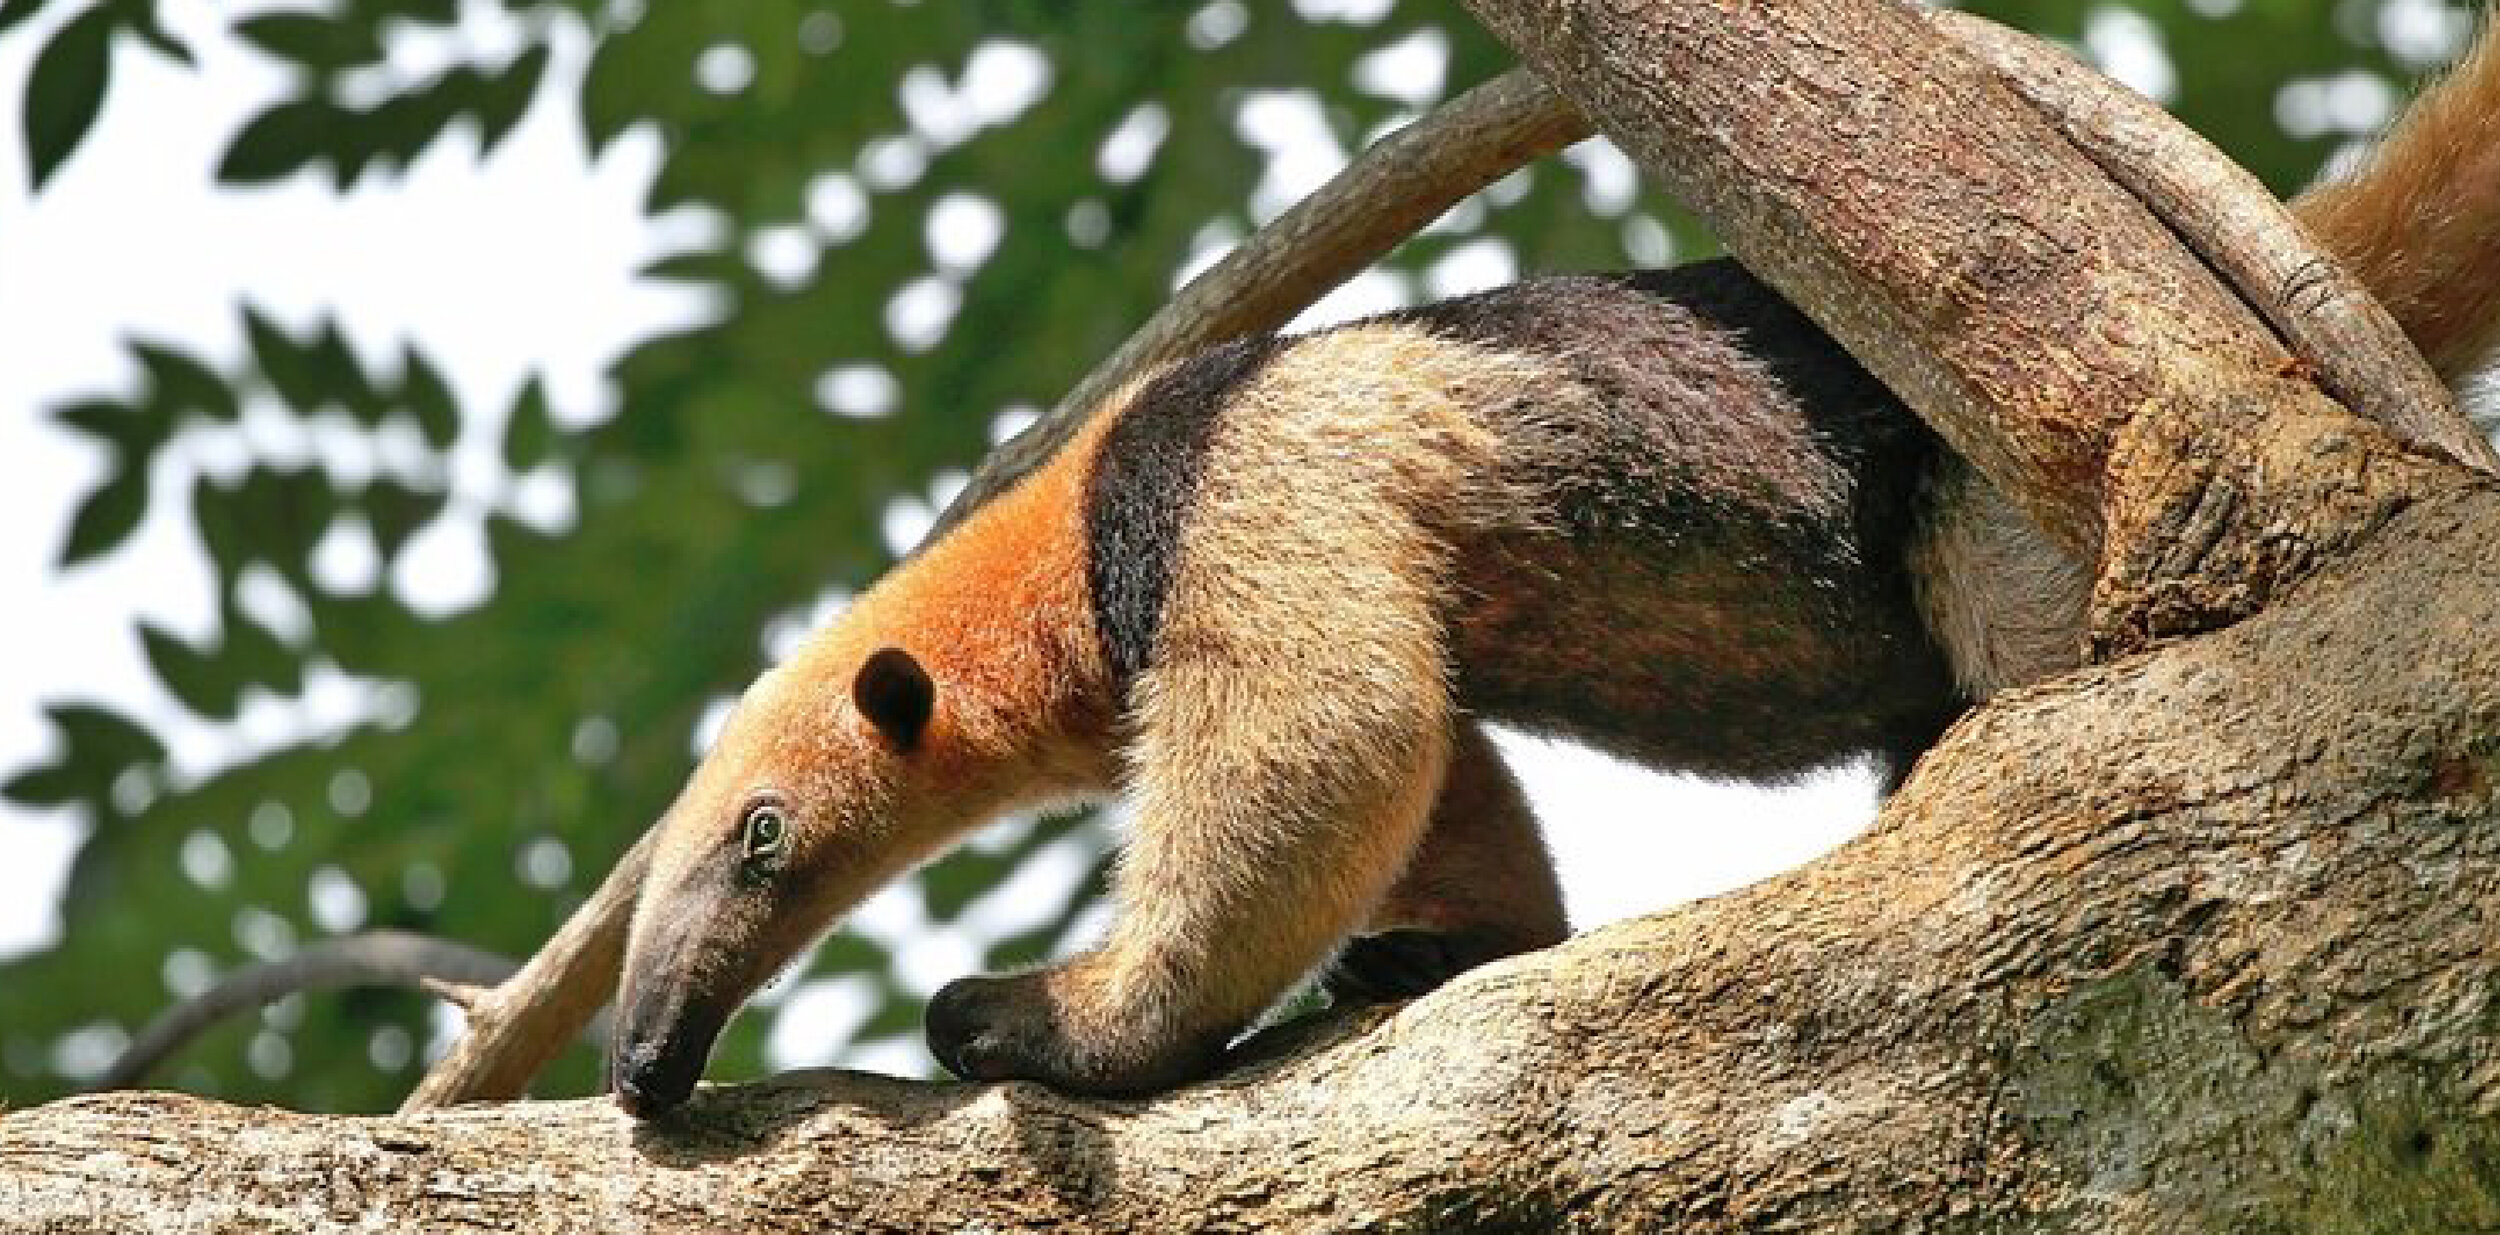 An orange and black anteater